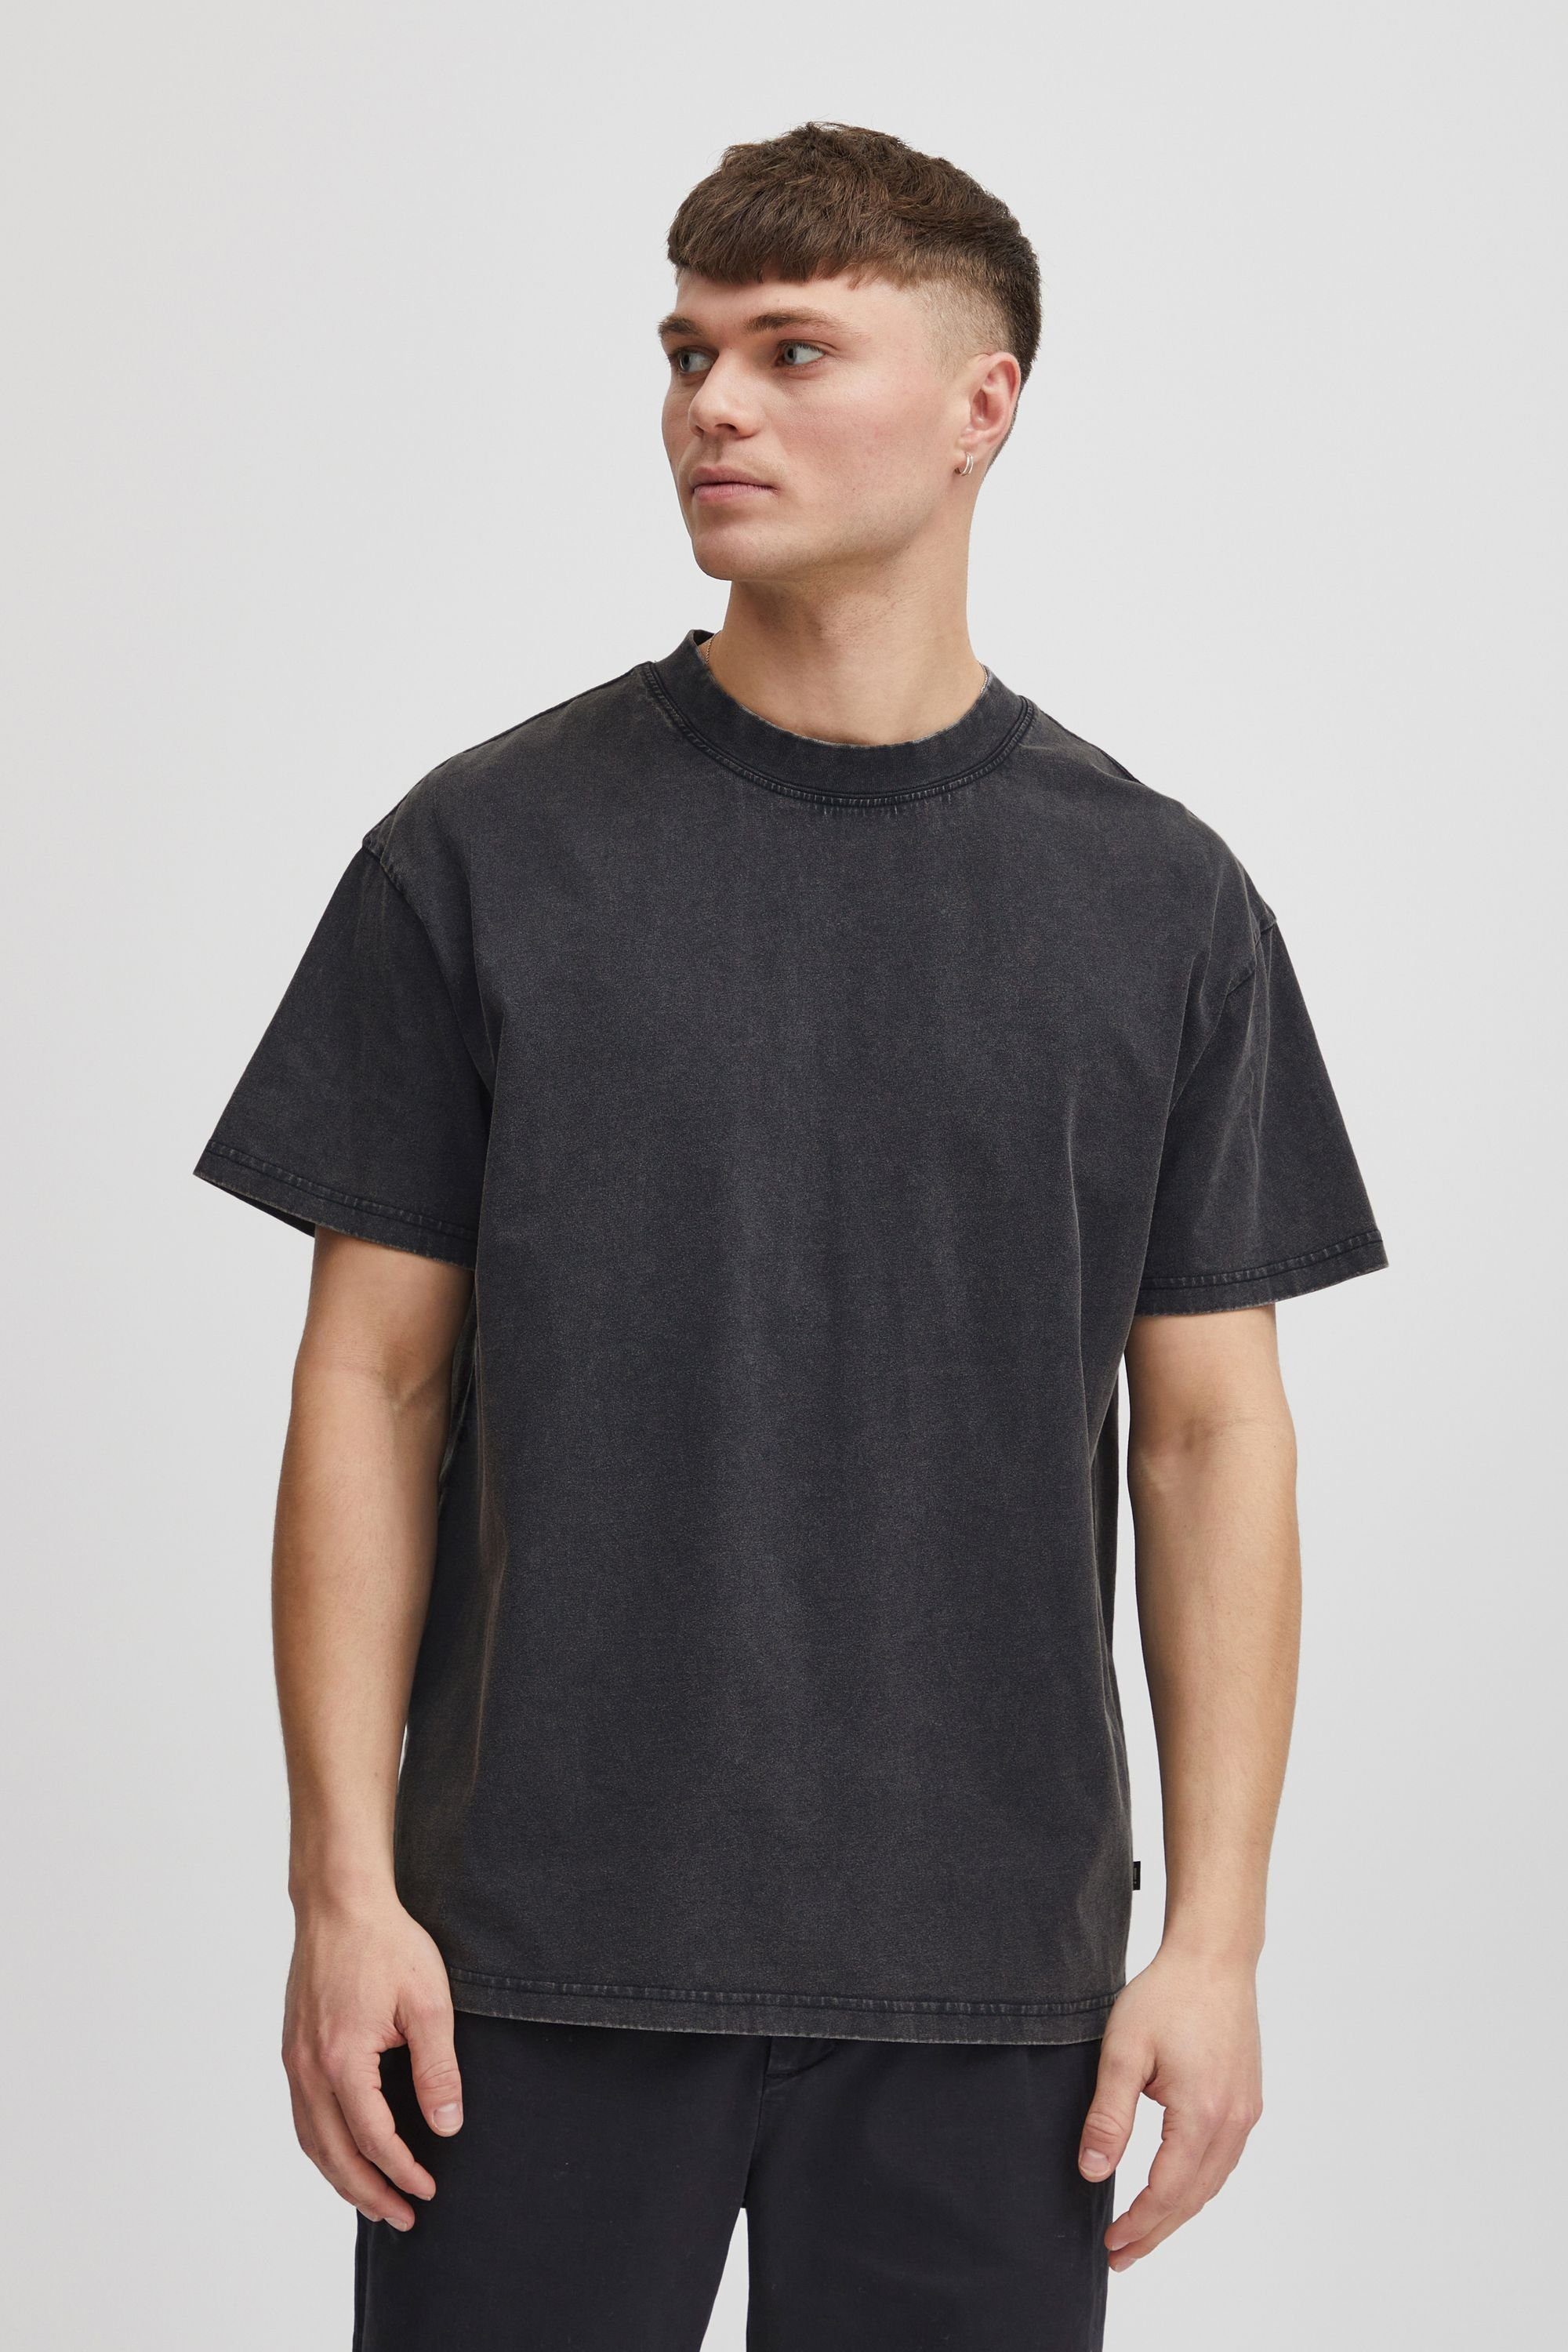 T-Shirt !Solid Black (194008) SDGerlak 21107878 True -